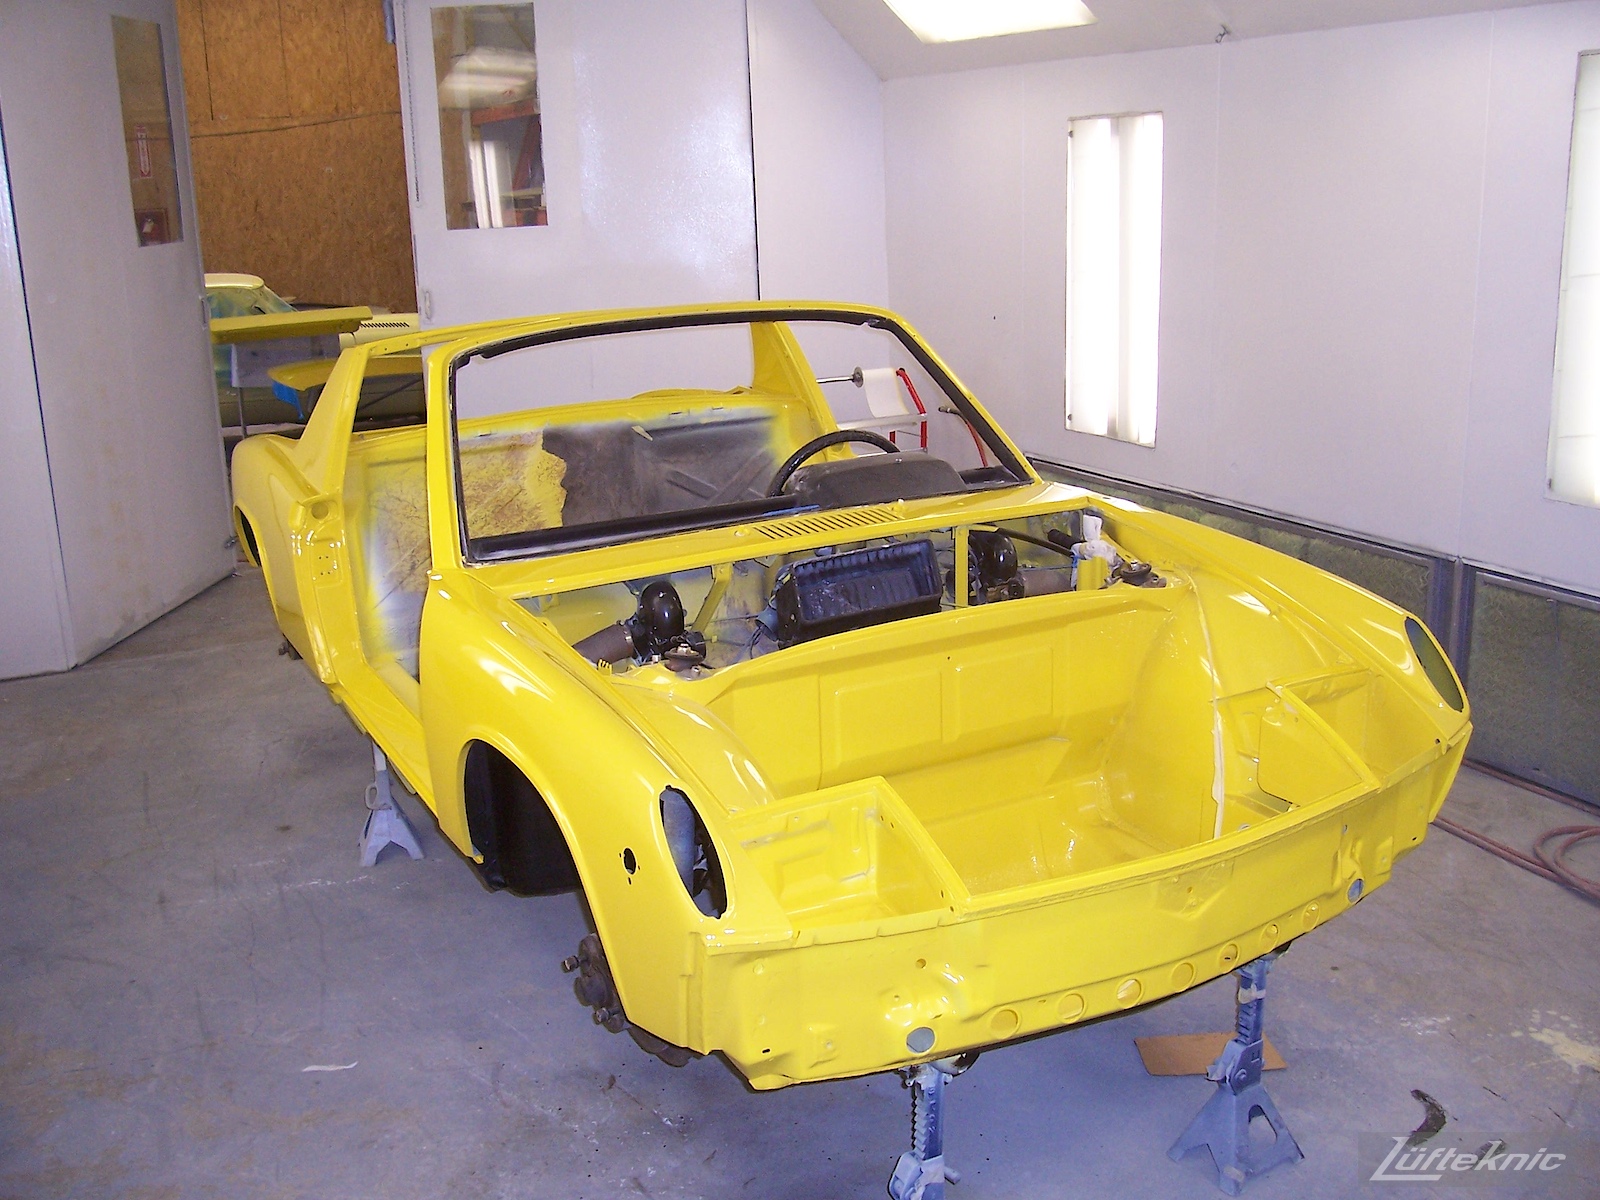 Fresh yellow paint on a Porsche 914 being restored.